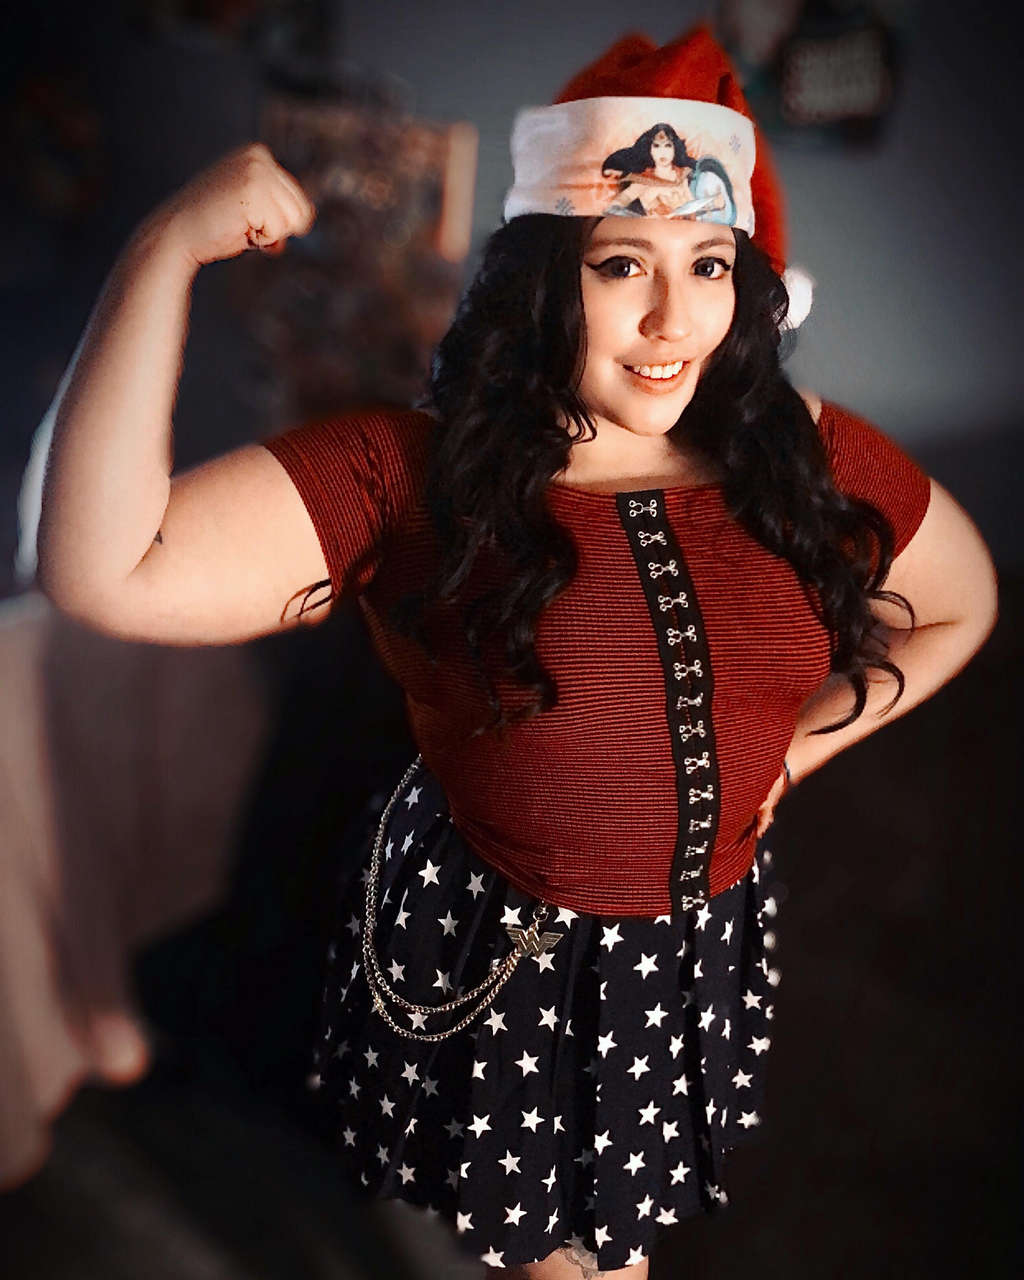 Happy Christmas Anyone Else Ready For Wonderwoman8